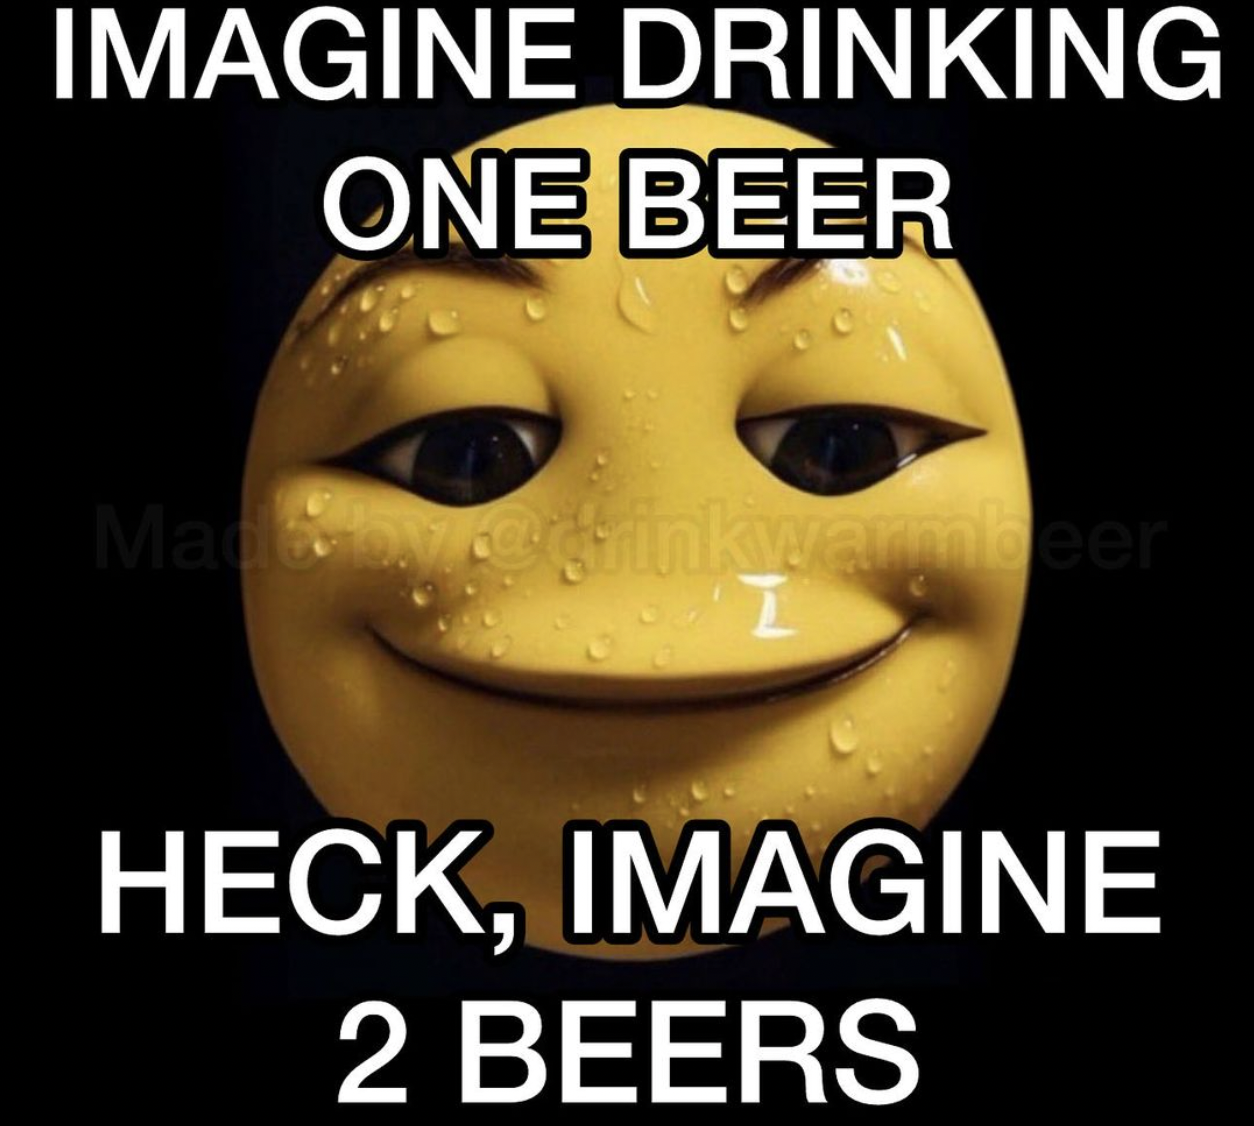 photo caption - Imagine Drinking One Beer Madeweghinkwarbeer I Heck, Imagine 2 Beers